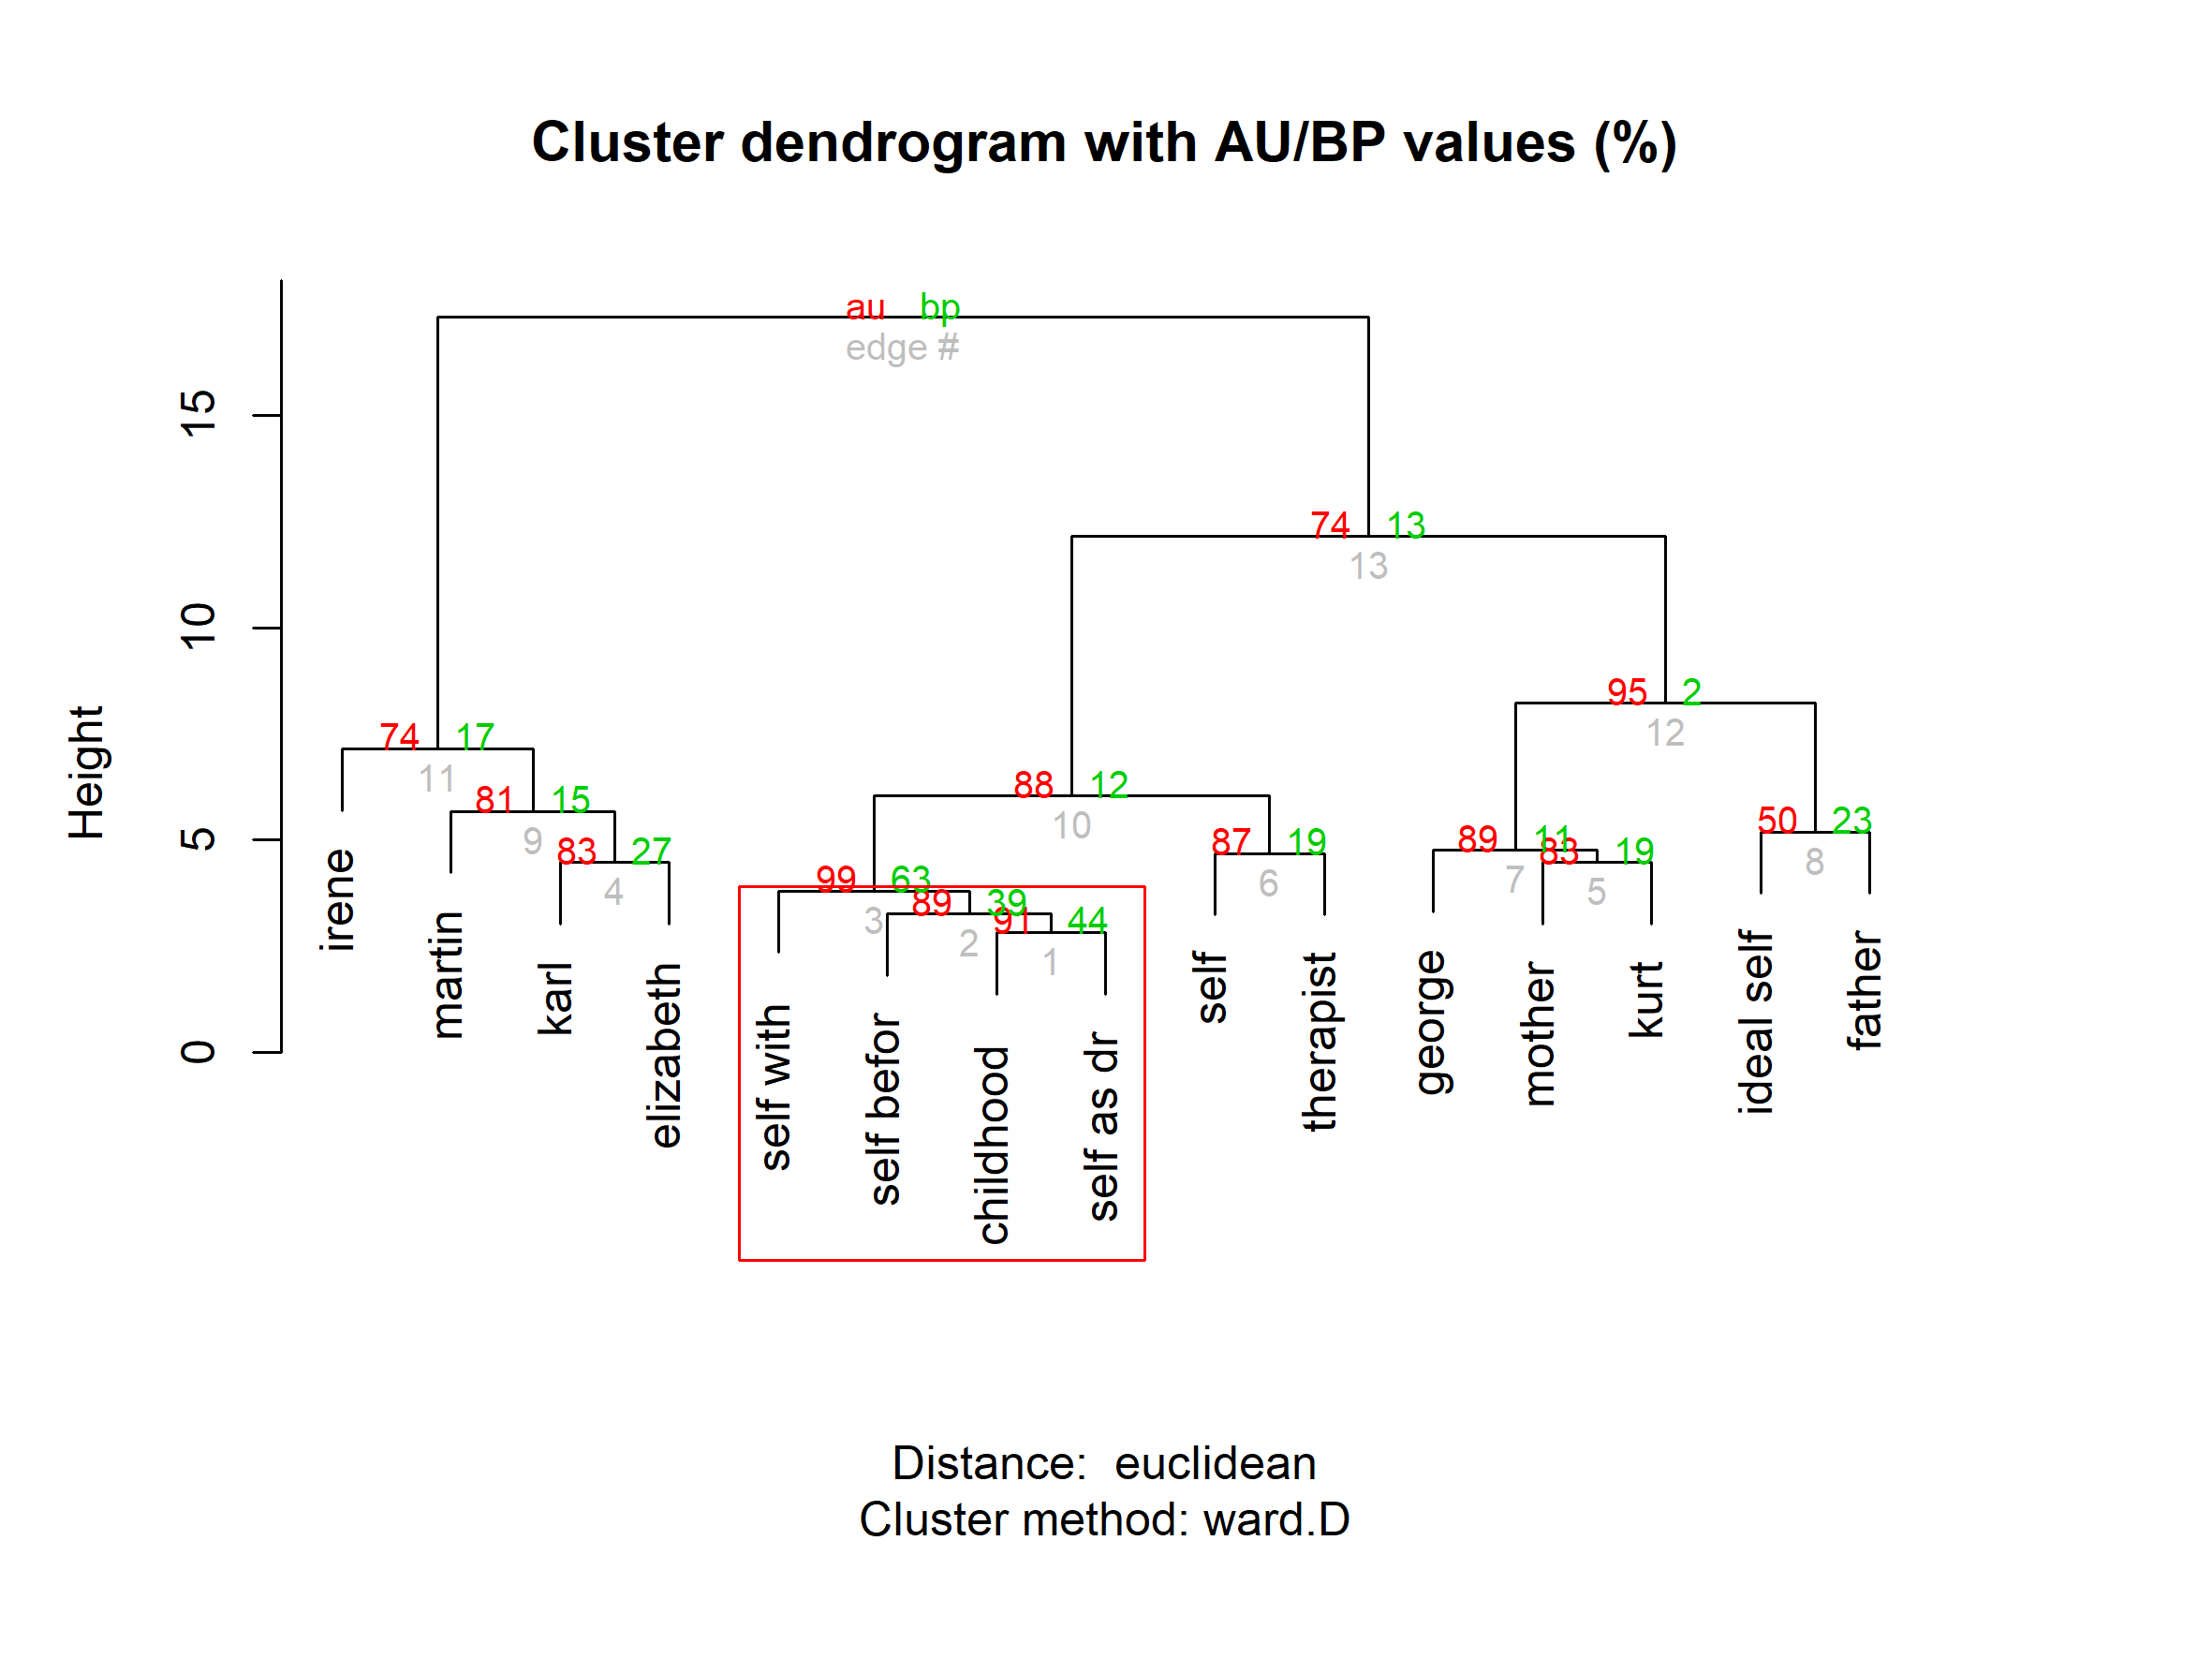 Figure 3. Dendrogram of clustering results.